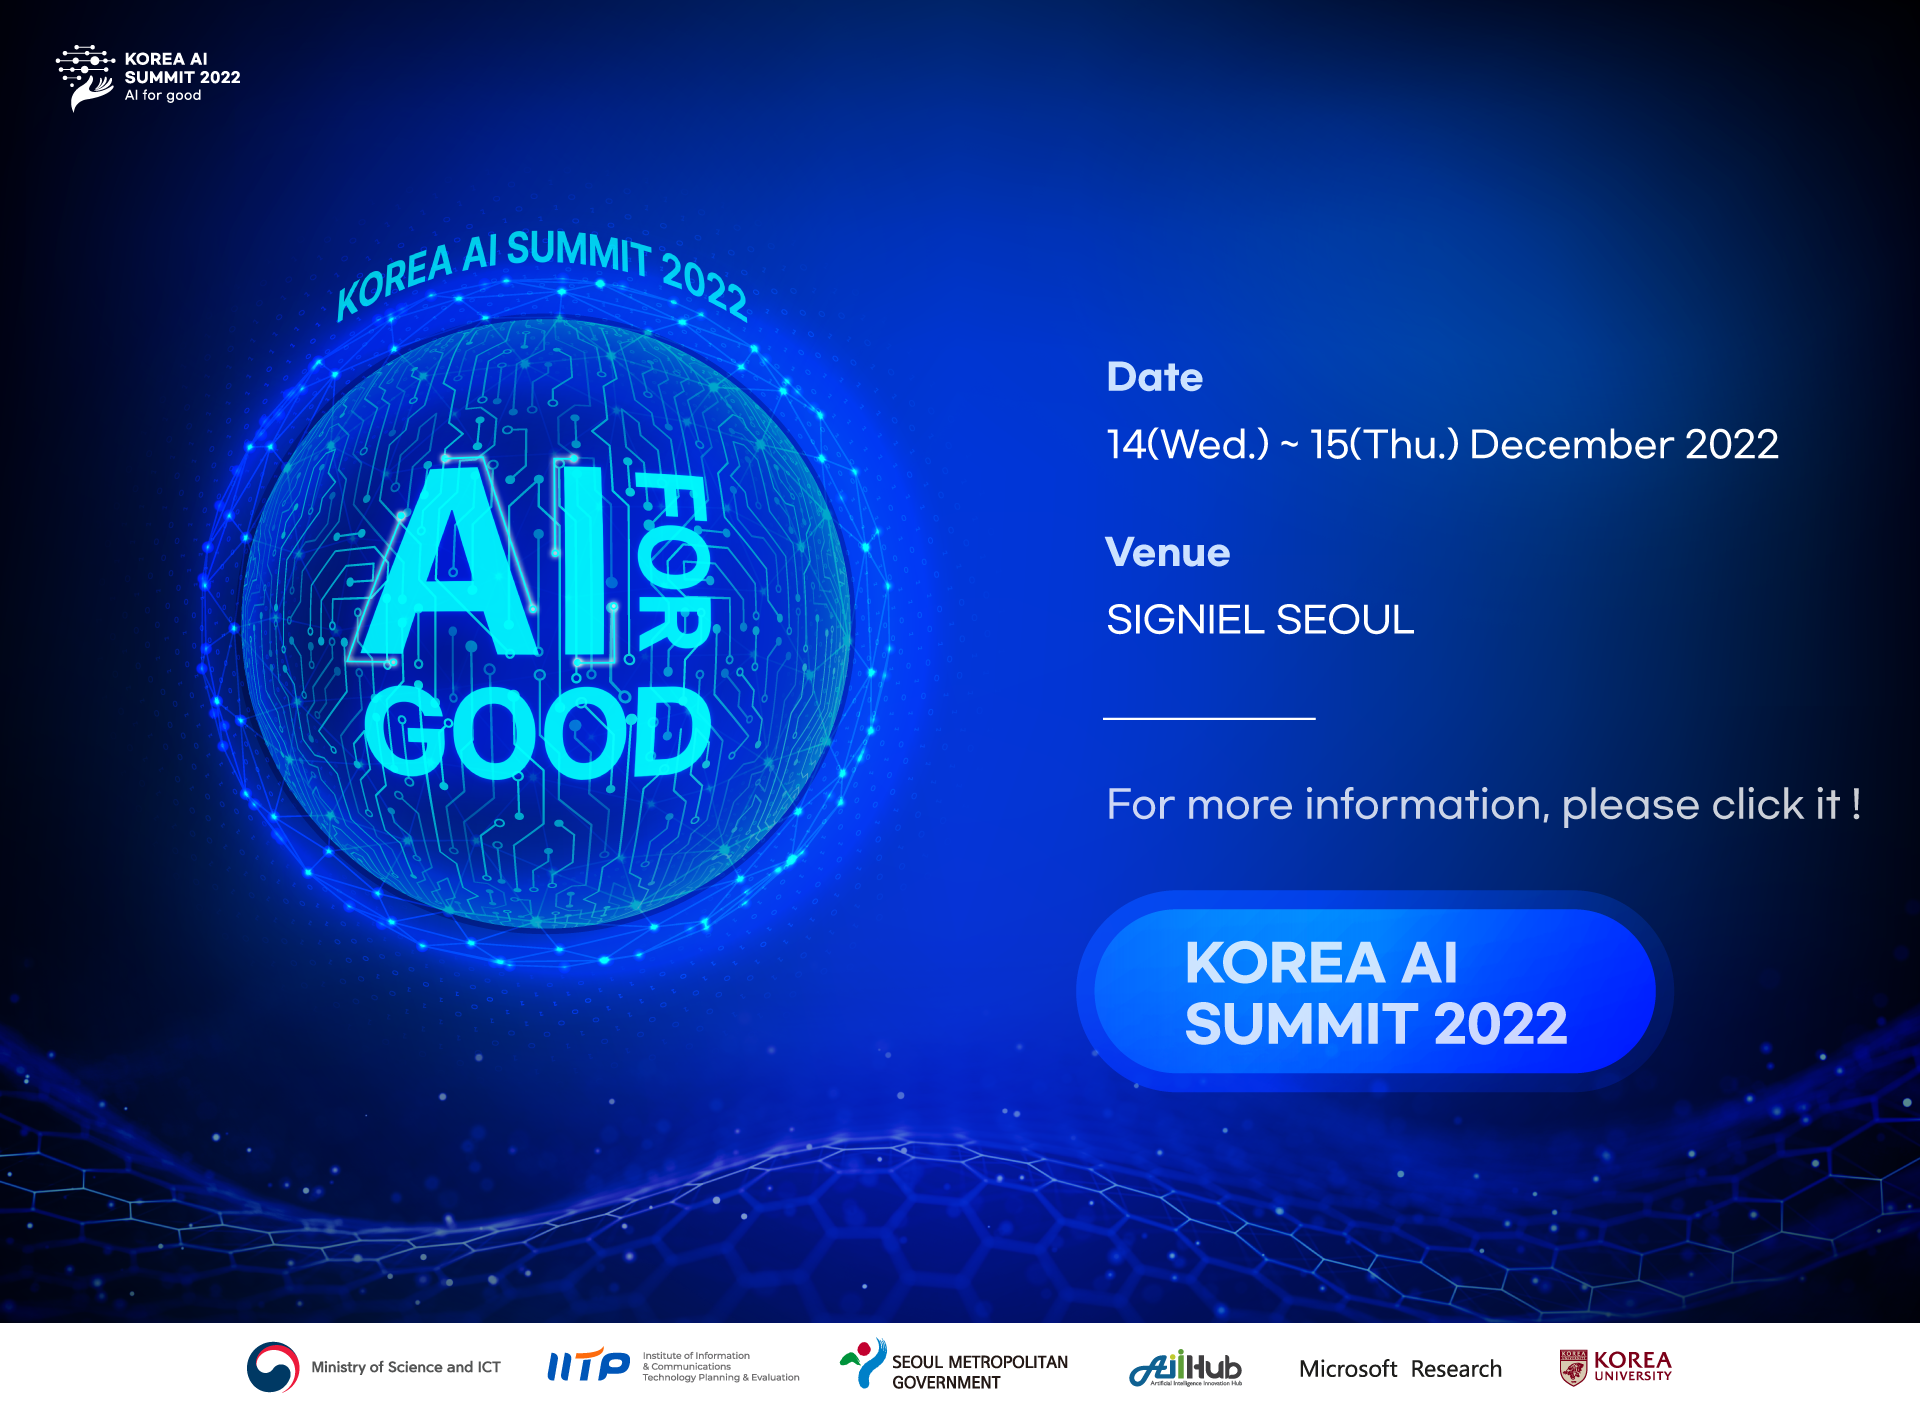 Korea AI summit 2022